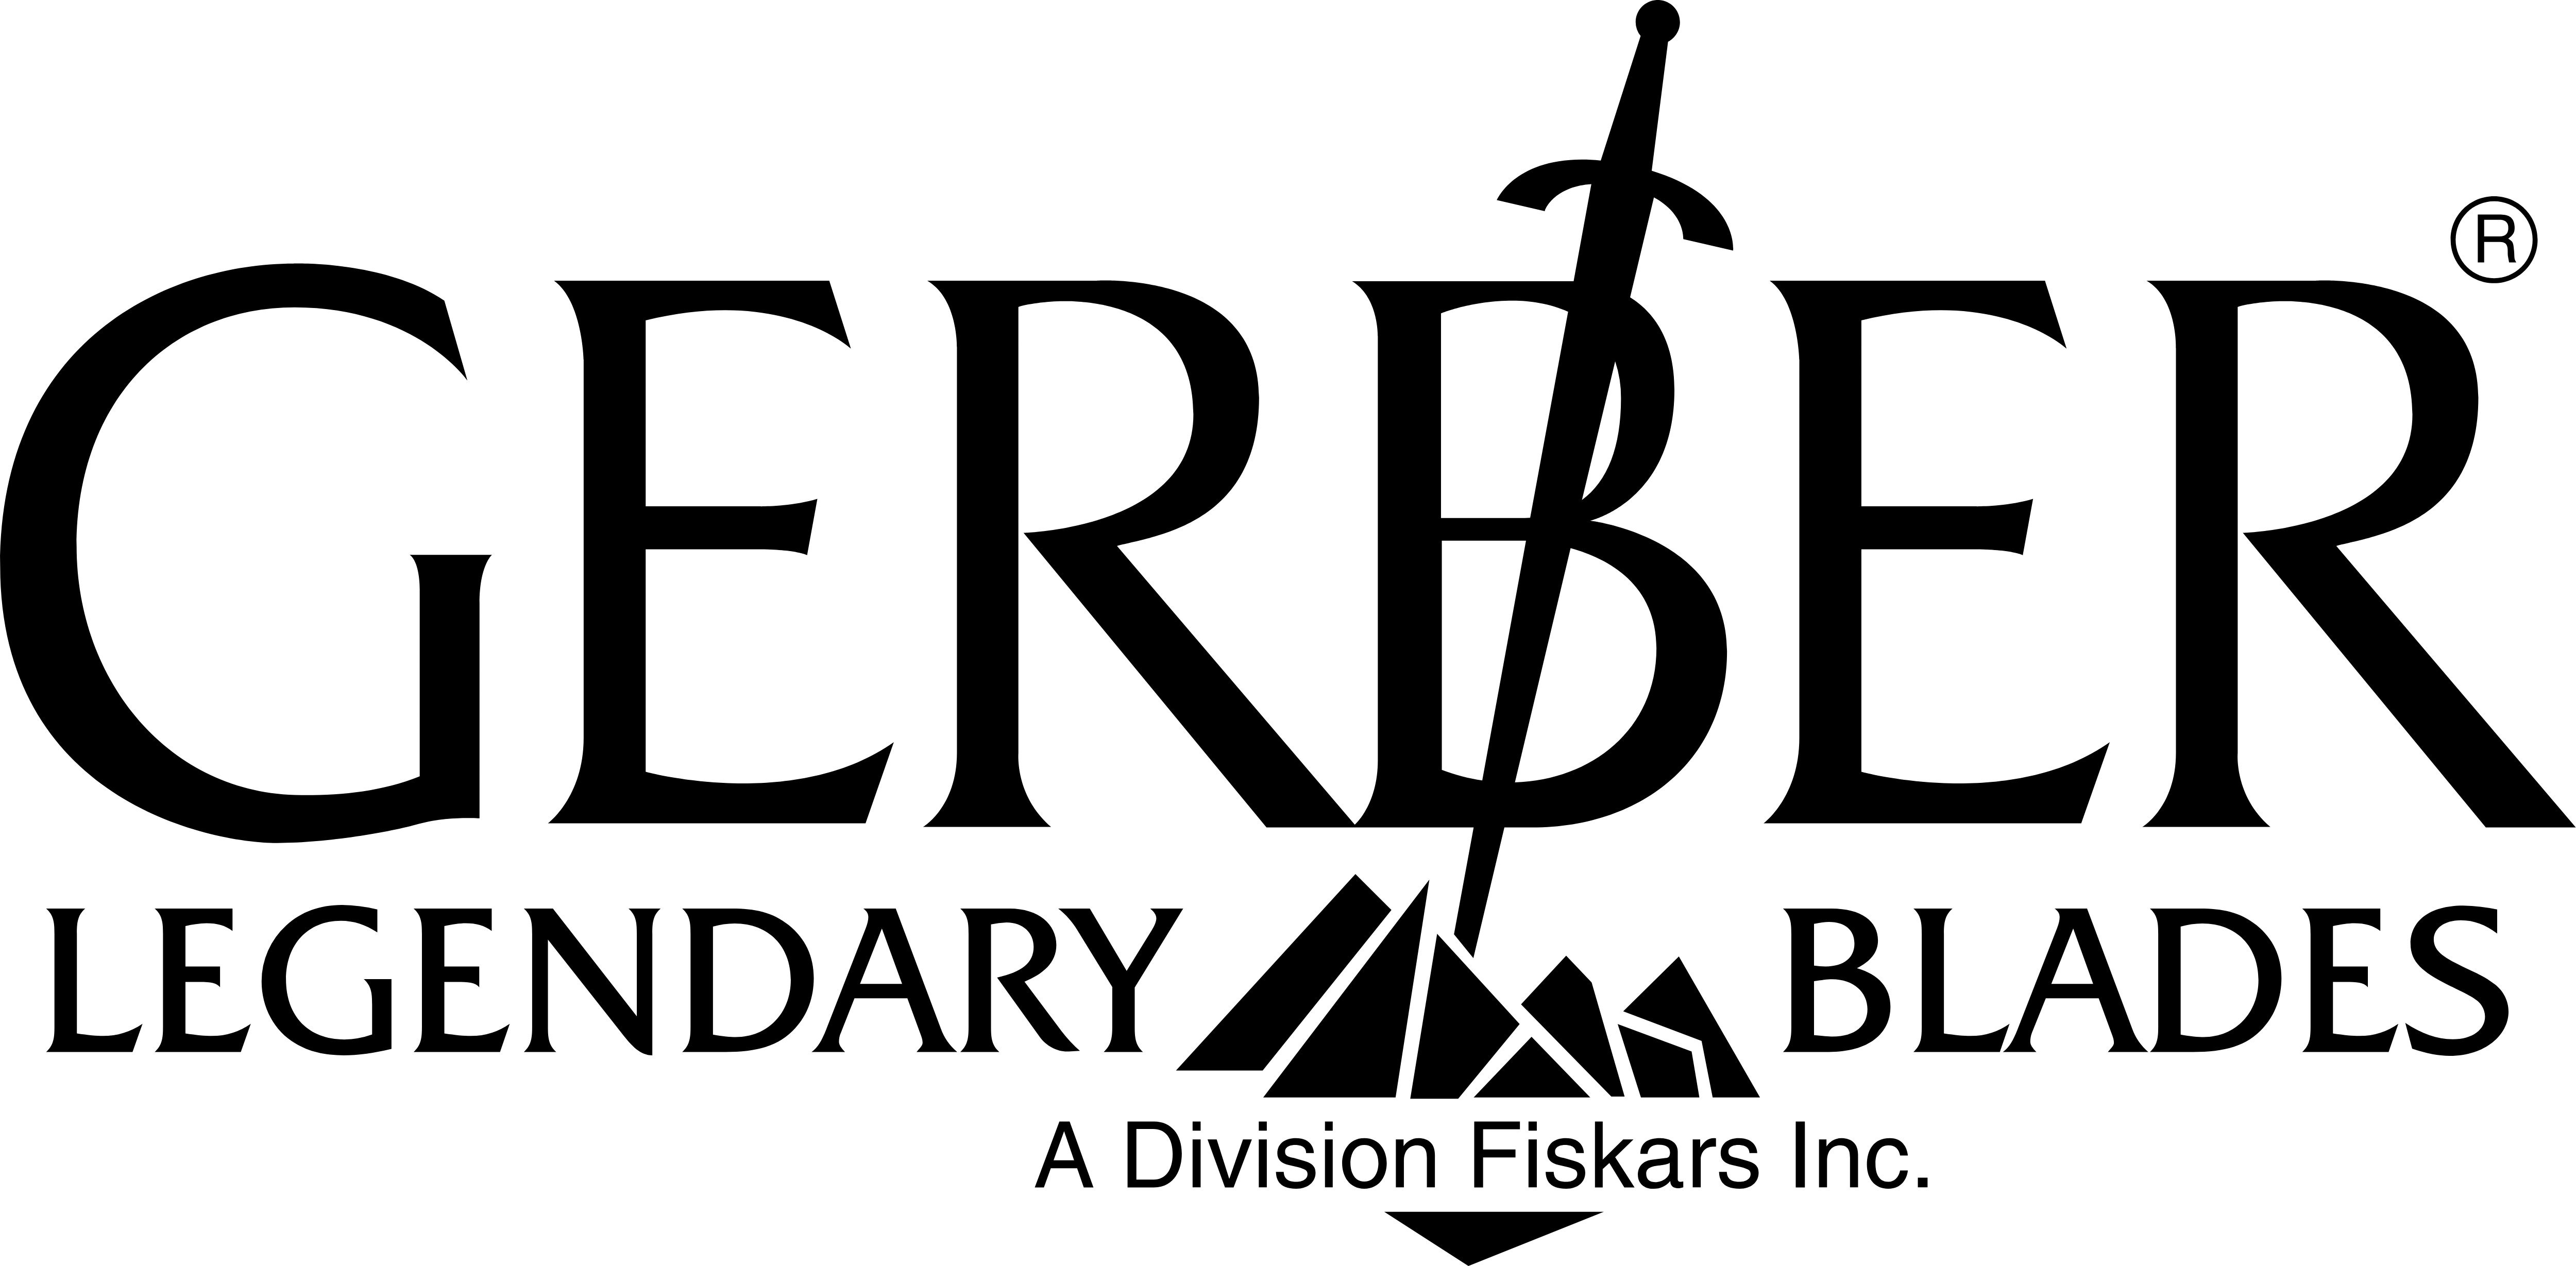 Gerber Tools Logo - Gerber blades – Logos Download